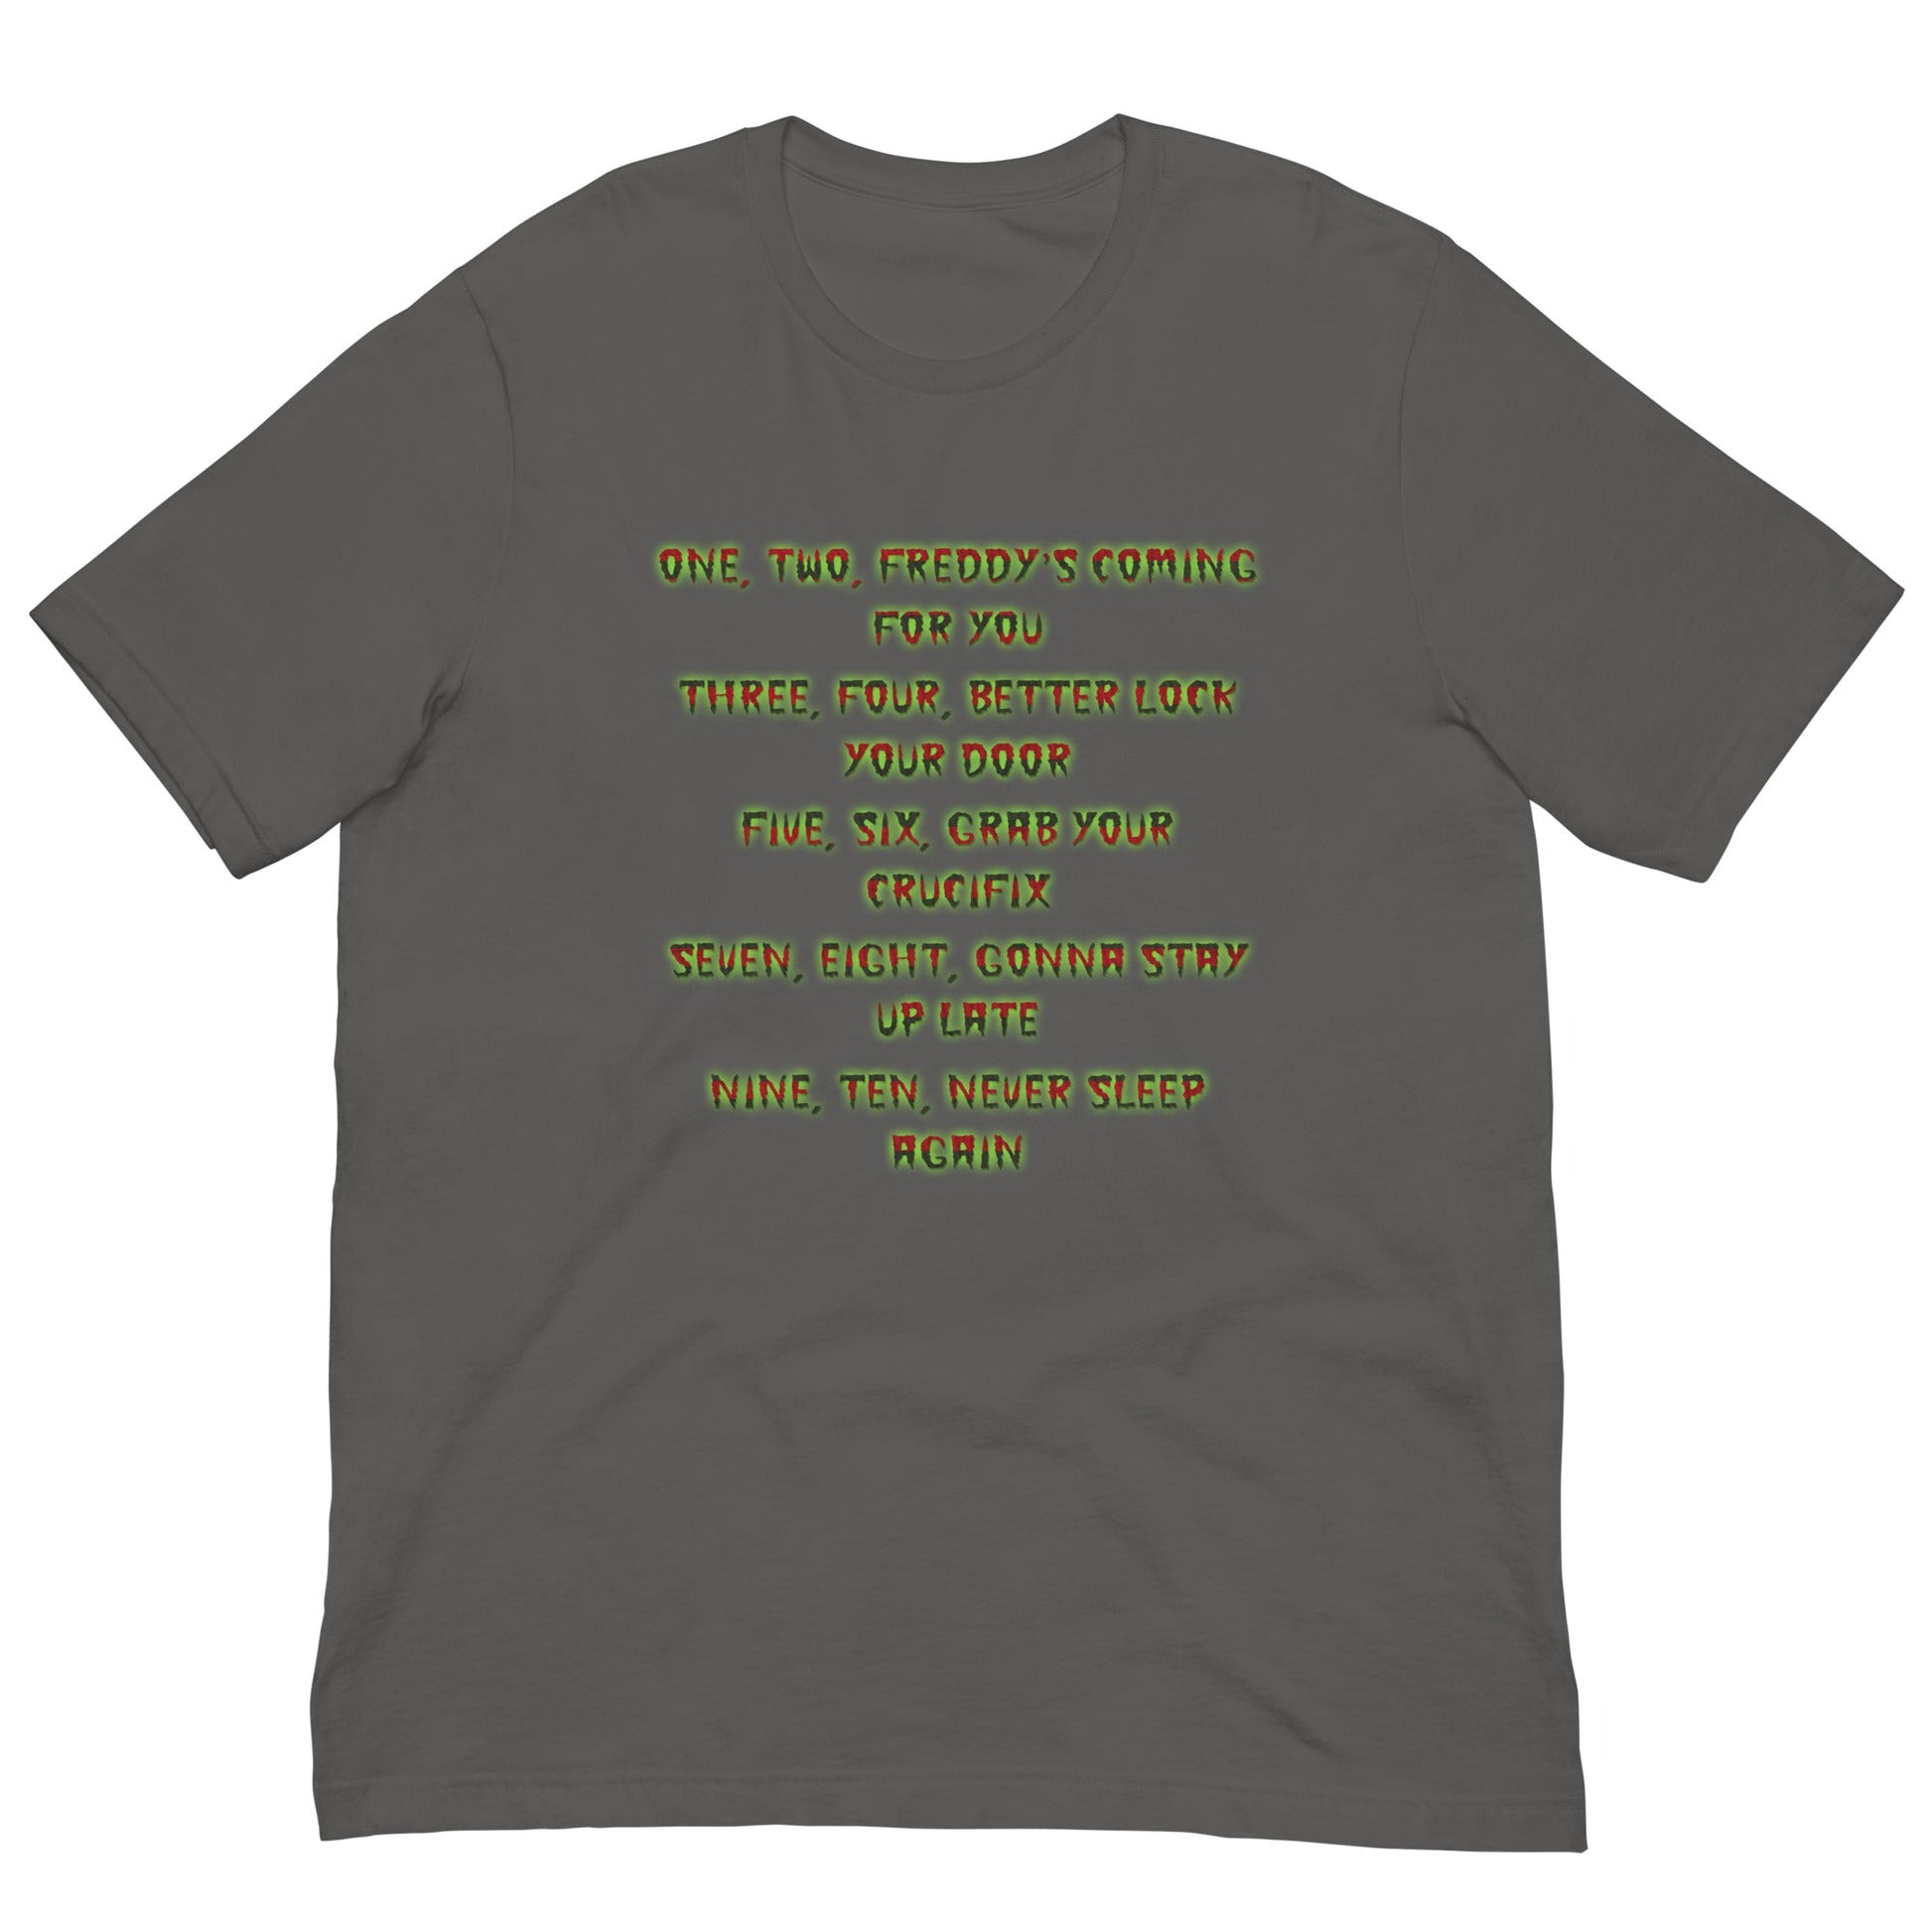 Scar Design Asphalt / S Horror Lullaby T-shirt